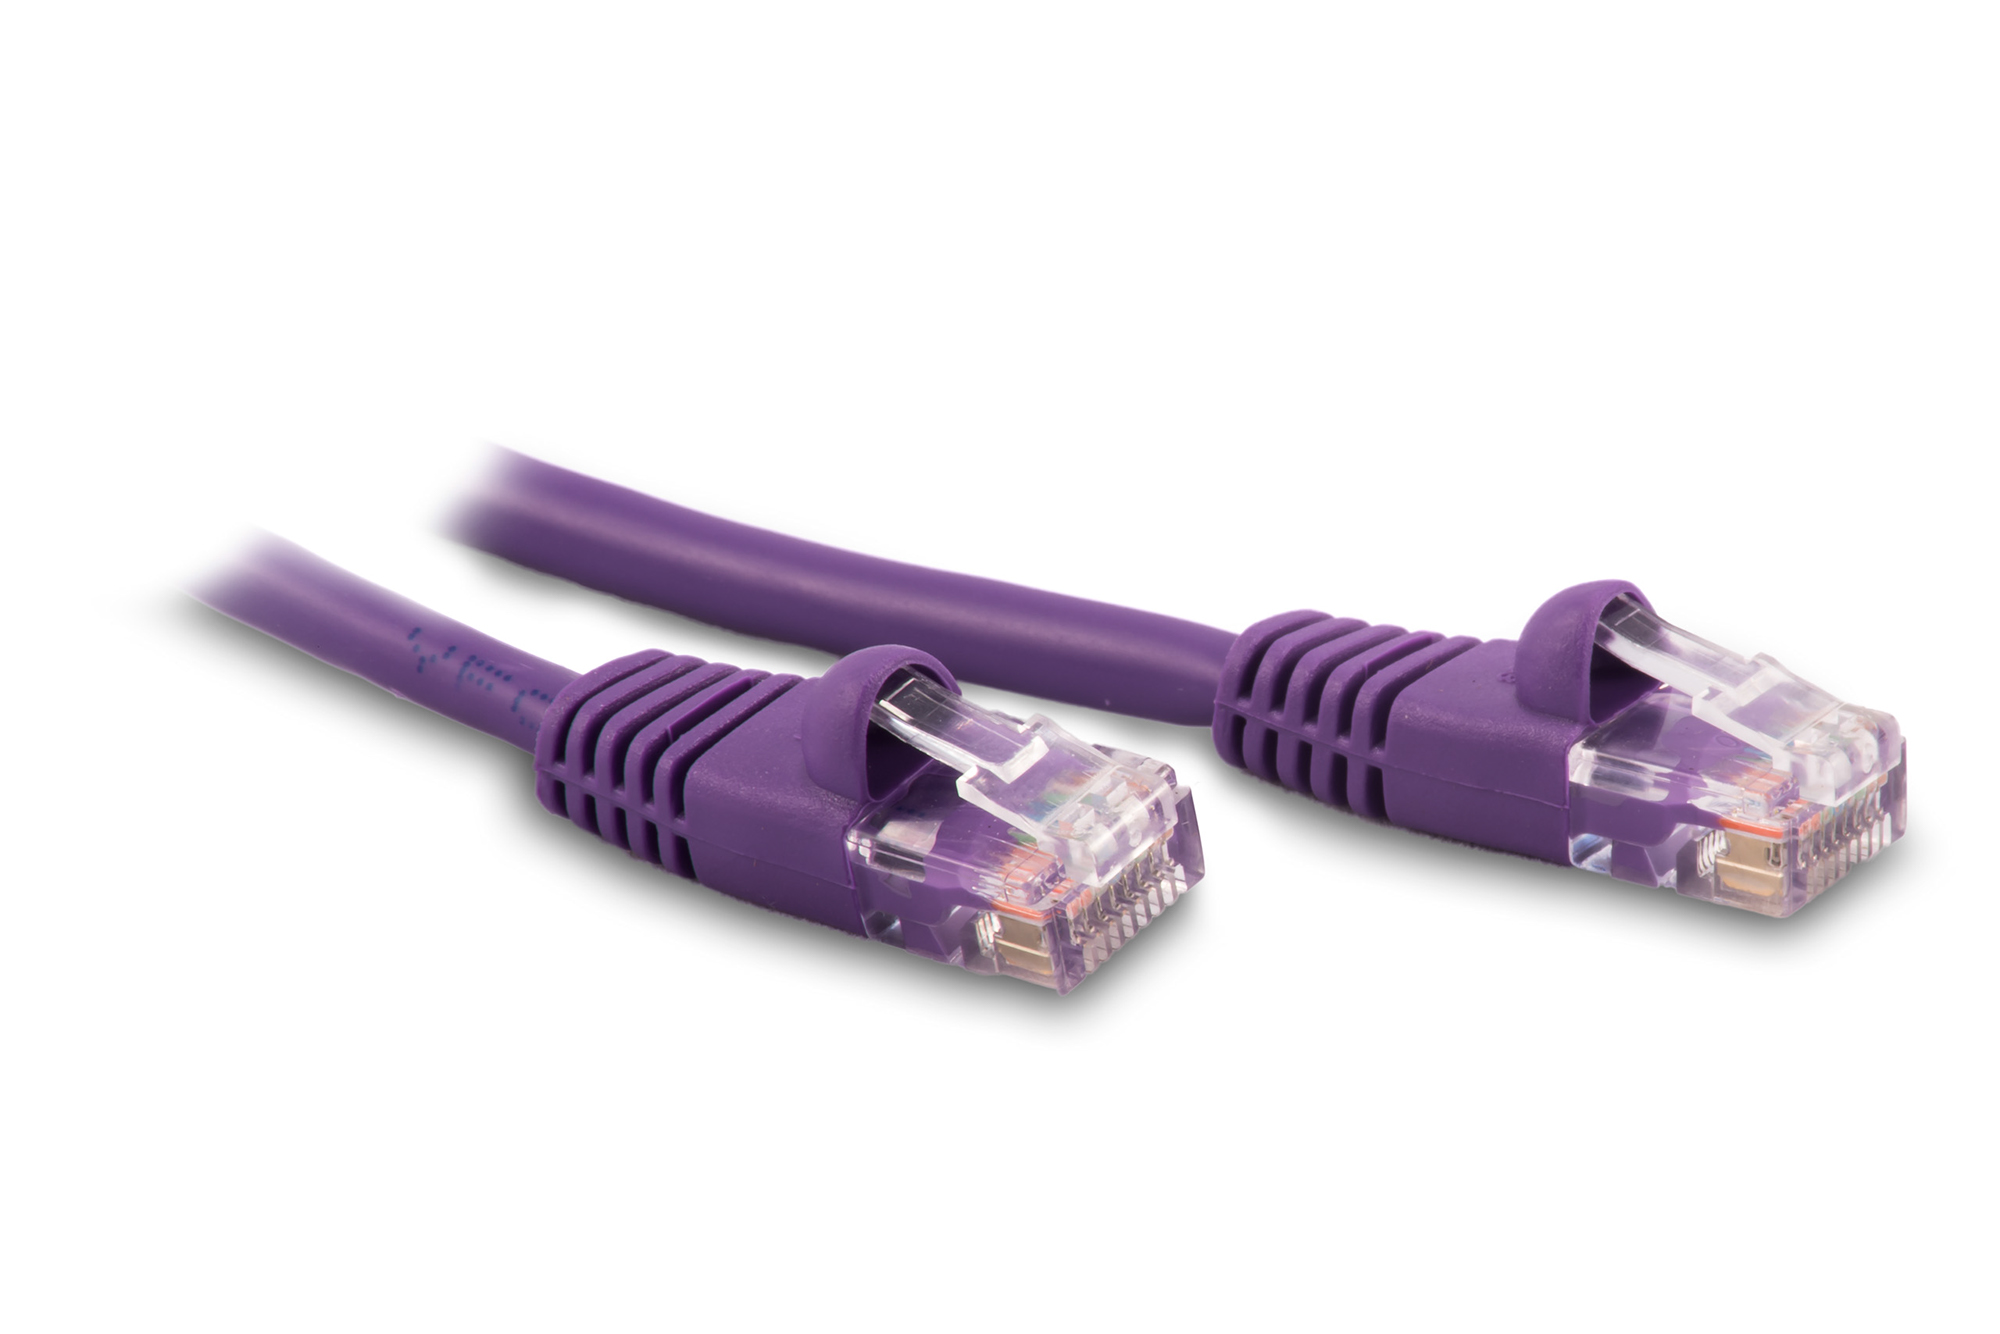 25ft Cat5e Ethernet Patch Cable - Violet Color - Snagless Boot, Stranded, RJ45, 350Mhz, 24AWG